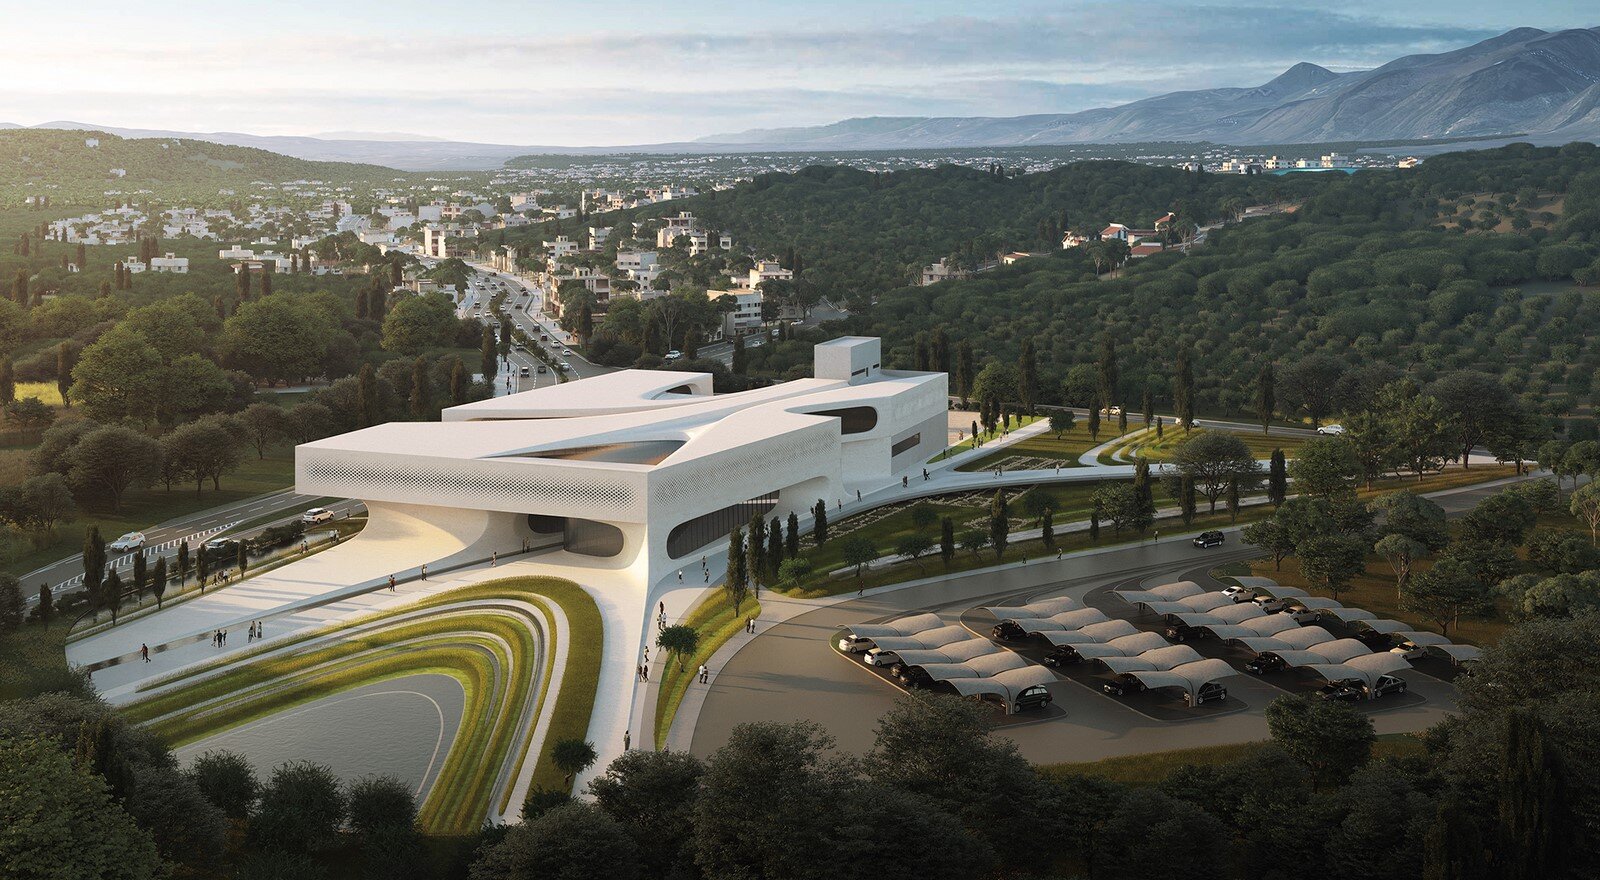 More information about "Η πρόταση των Zaha-Hadid Architects στο διαγωνισμό για το Νέο Αρχαιολογικό Μουσείο Σπάρτης"